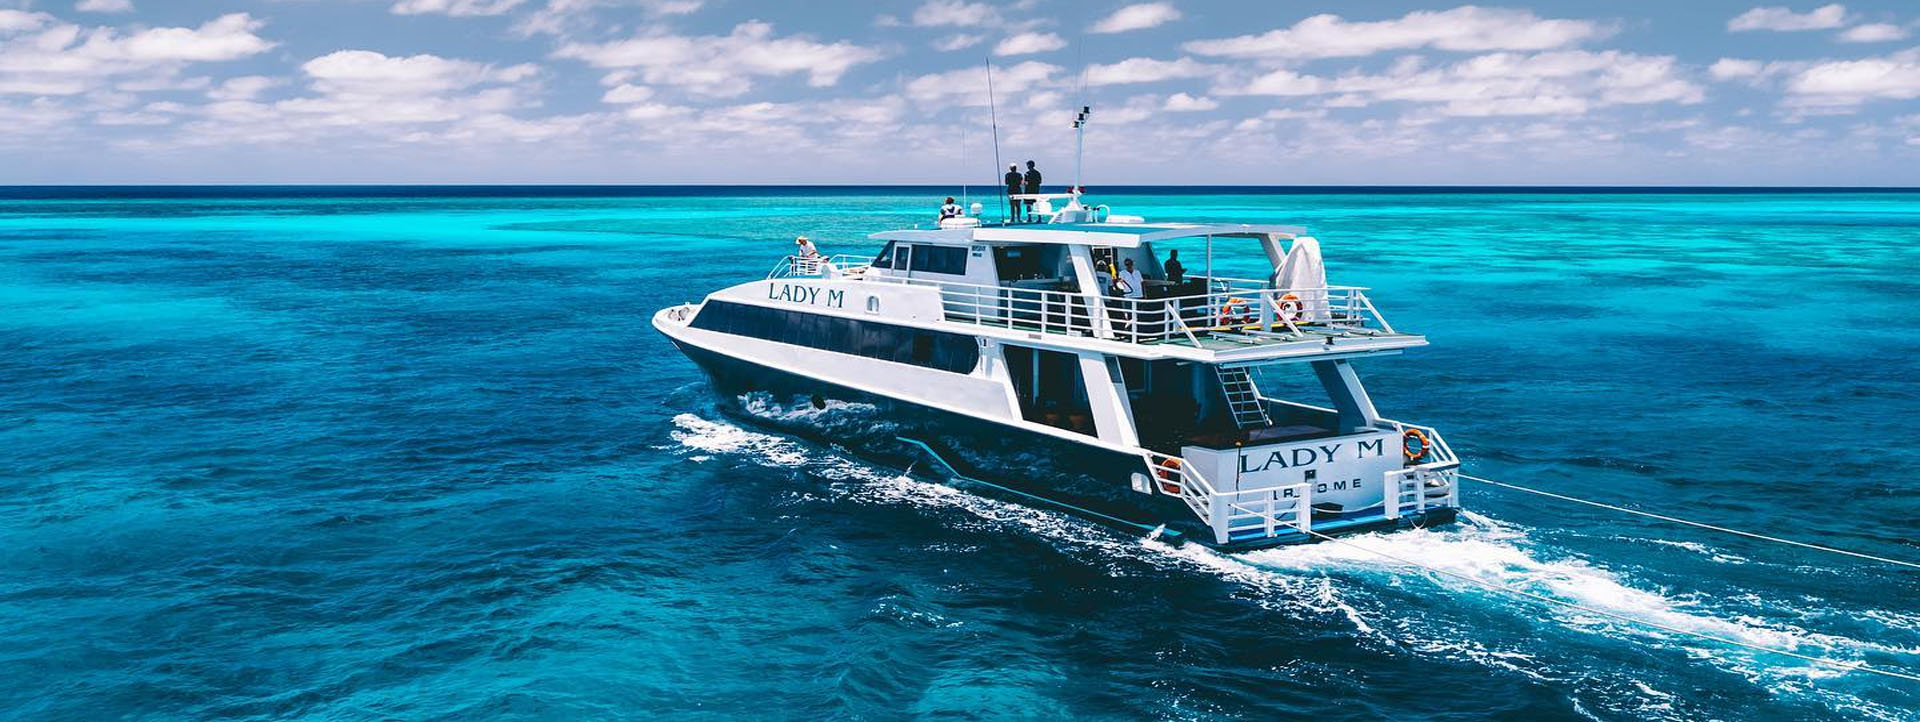 LADY M Rowley Shoals cruise blue lagoons